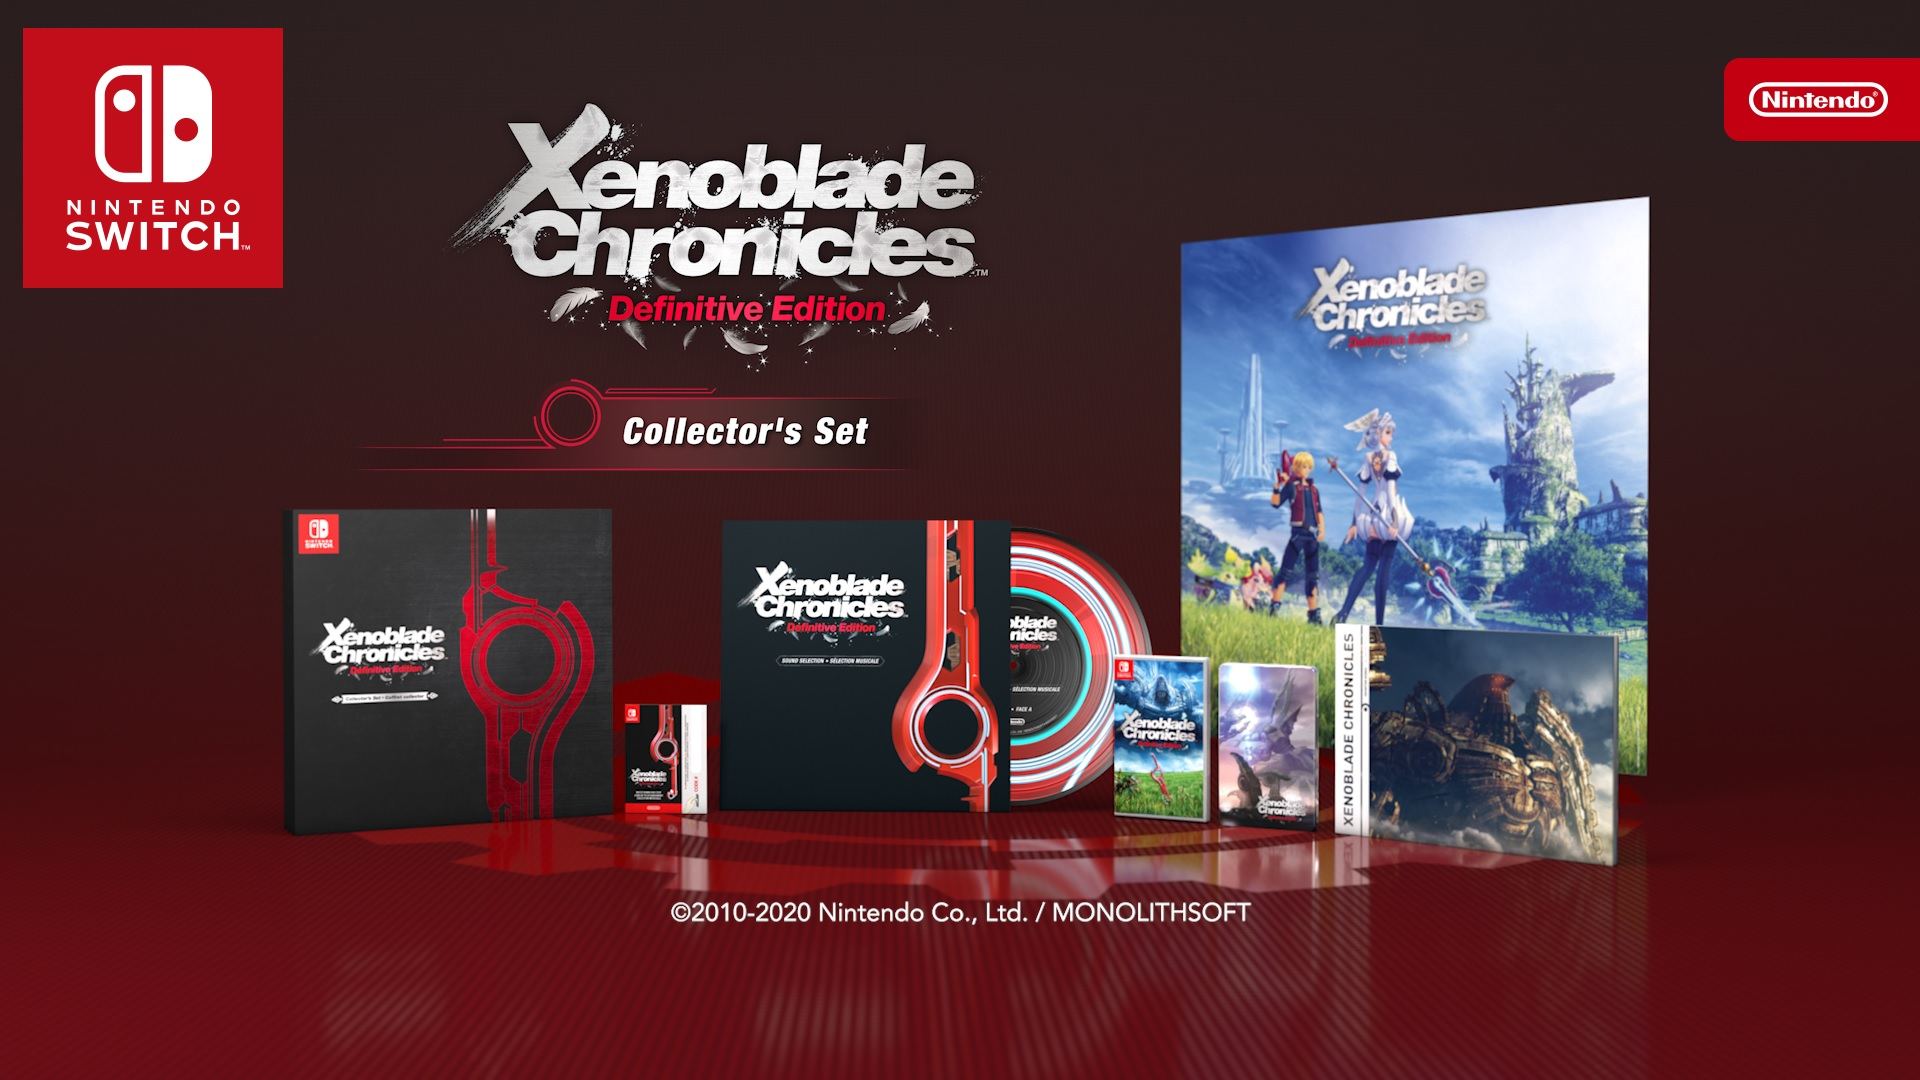 Xenoblade Chronicles: Definitive Edition (Collector's Set) for